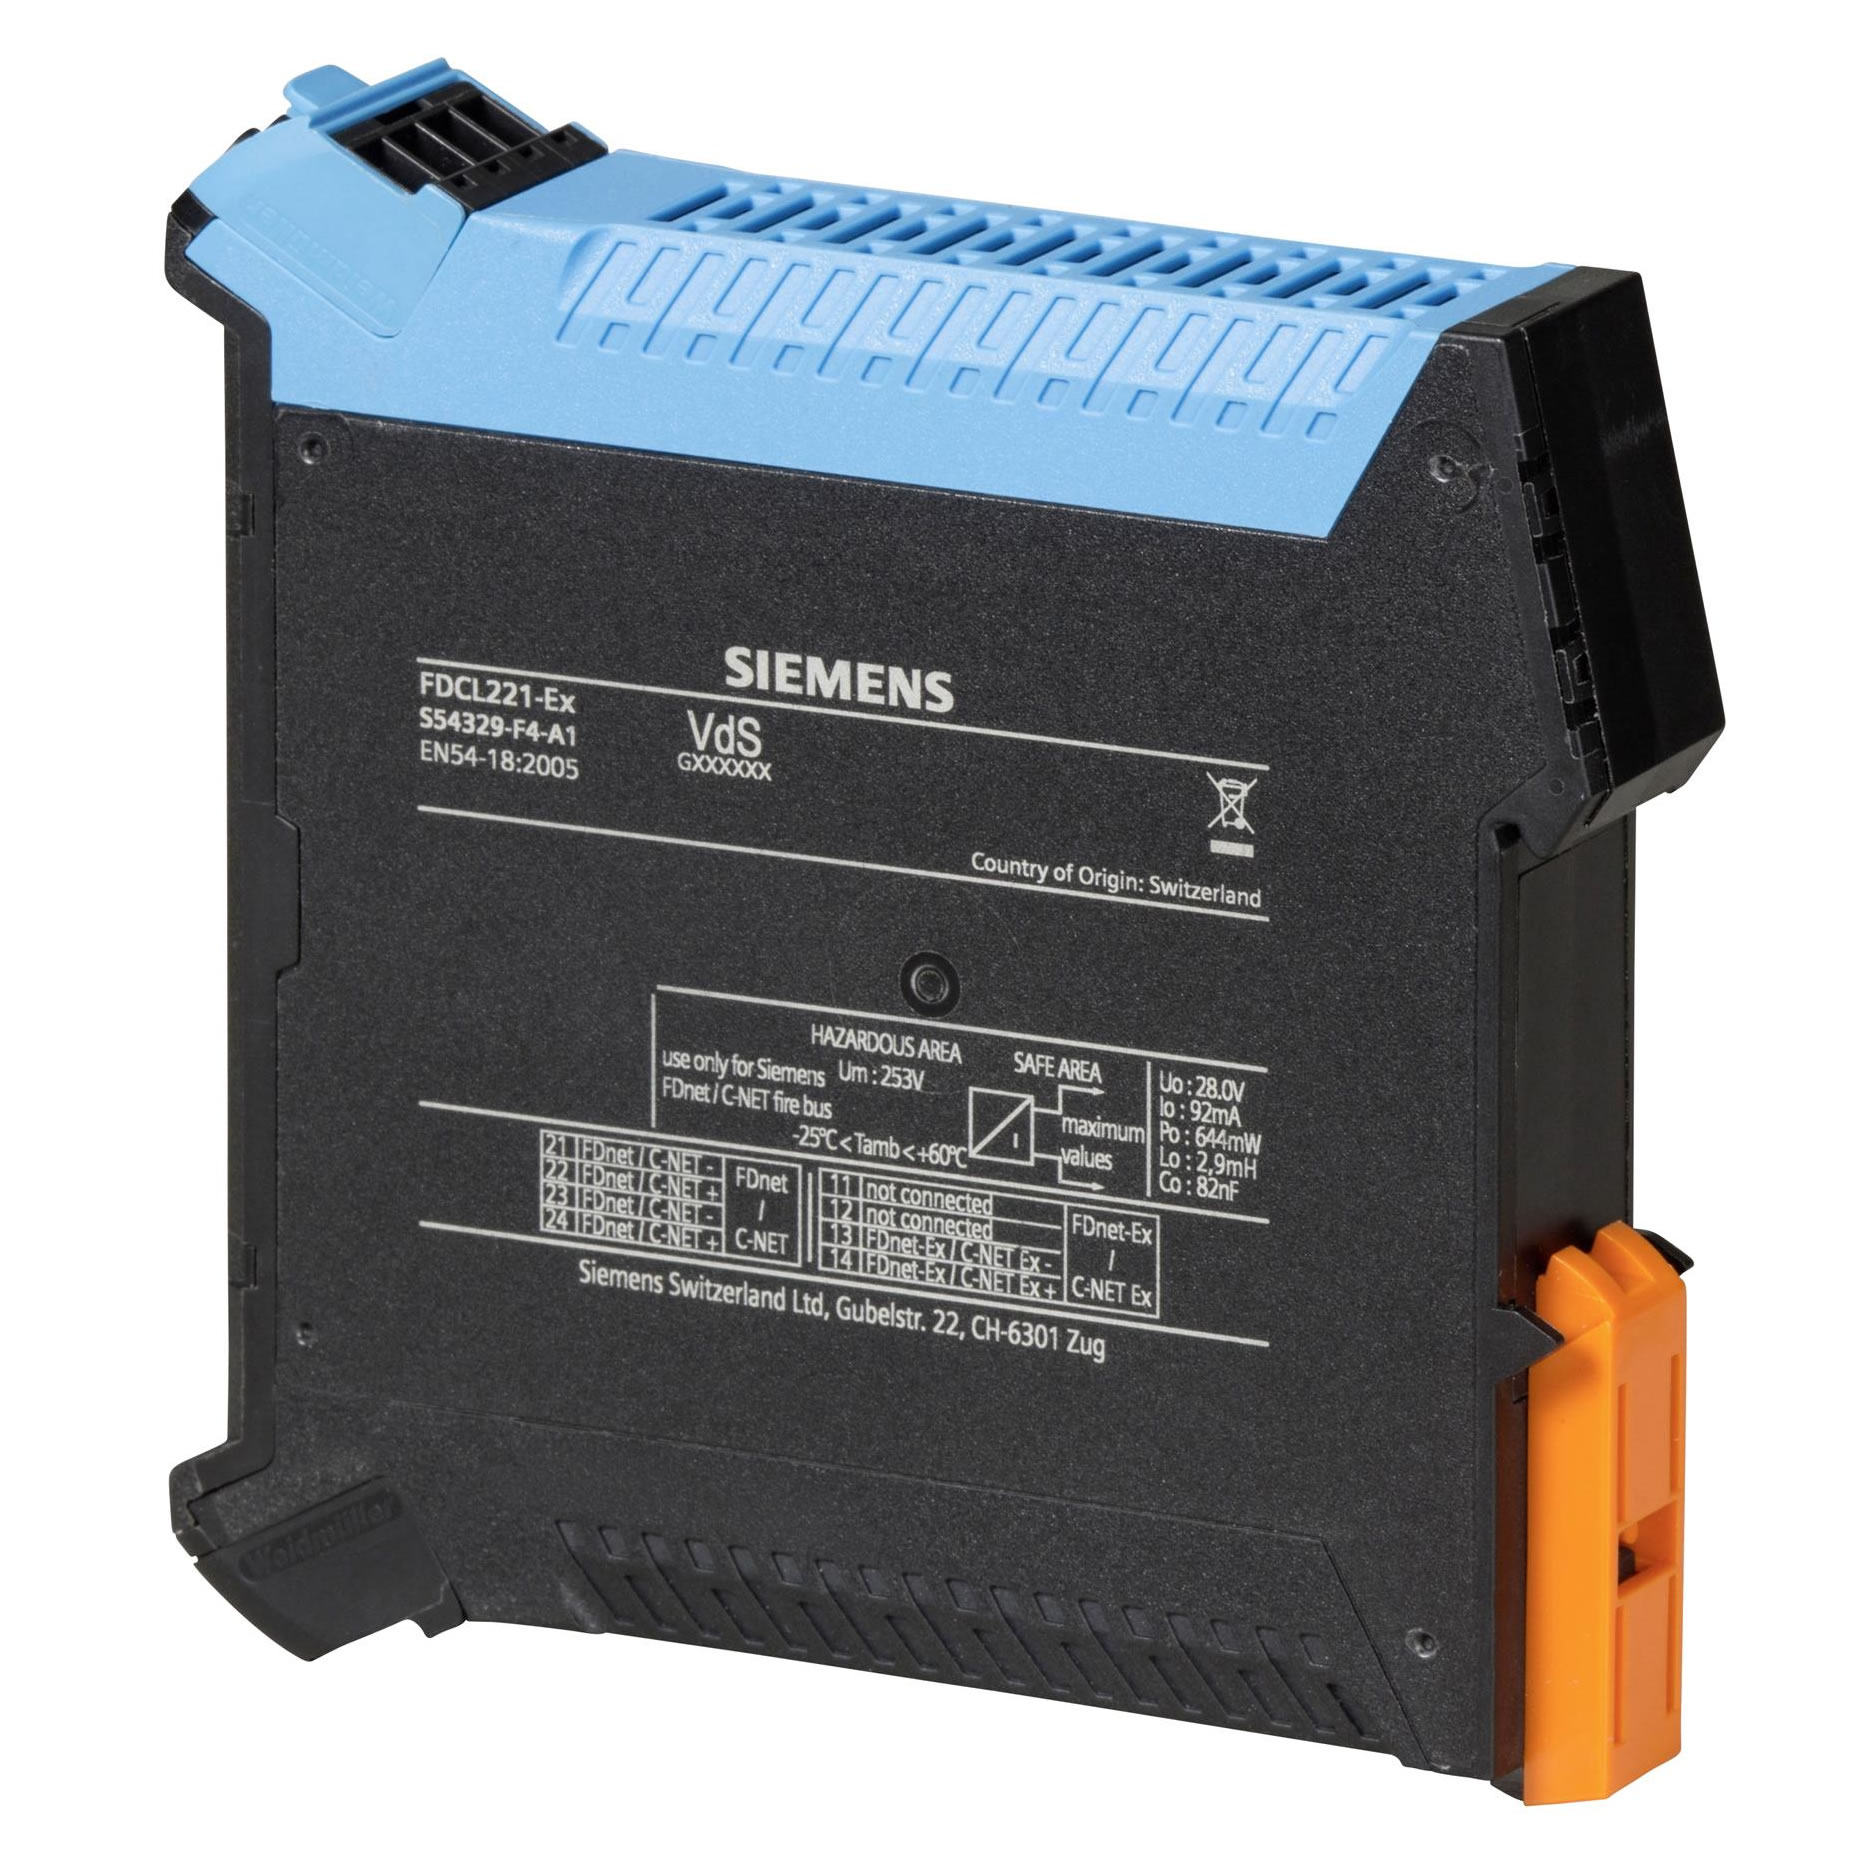 Siemens FDCL221-Ex jelvonal illesztő modul